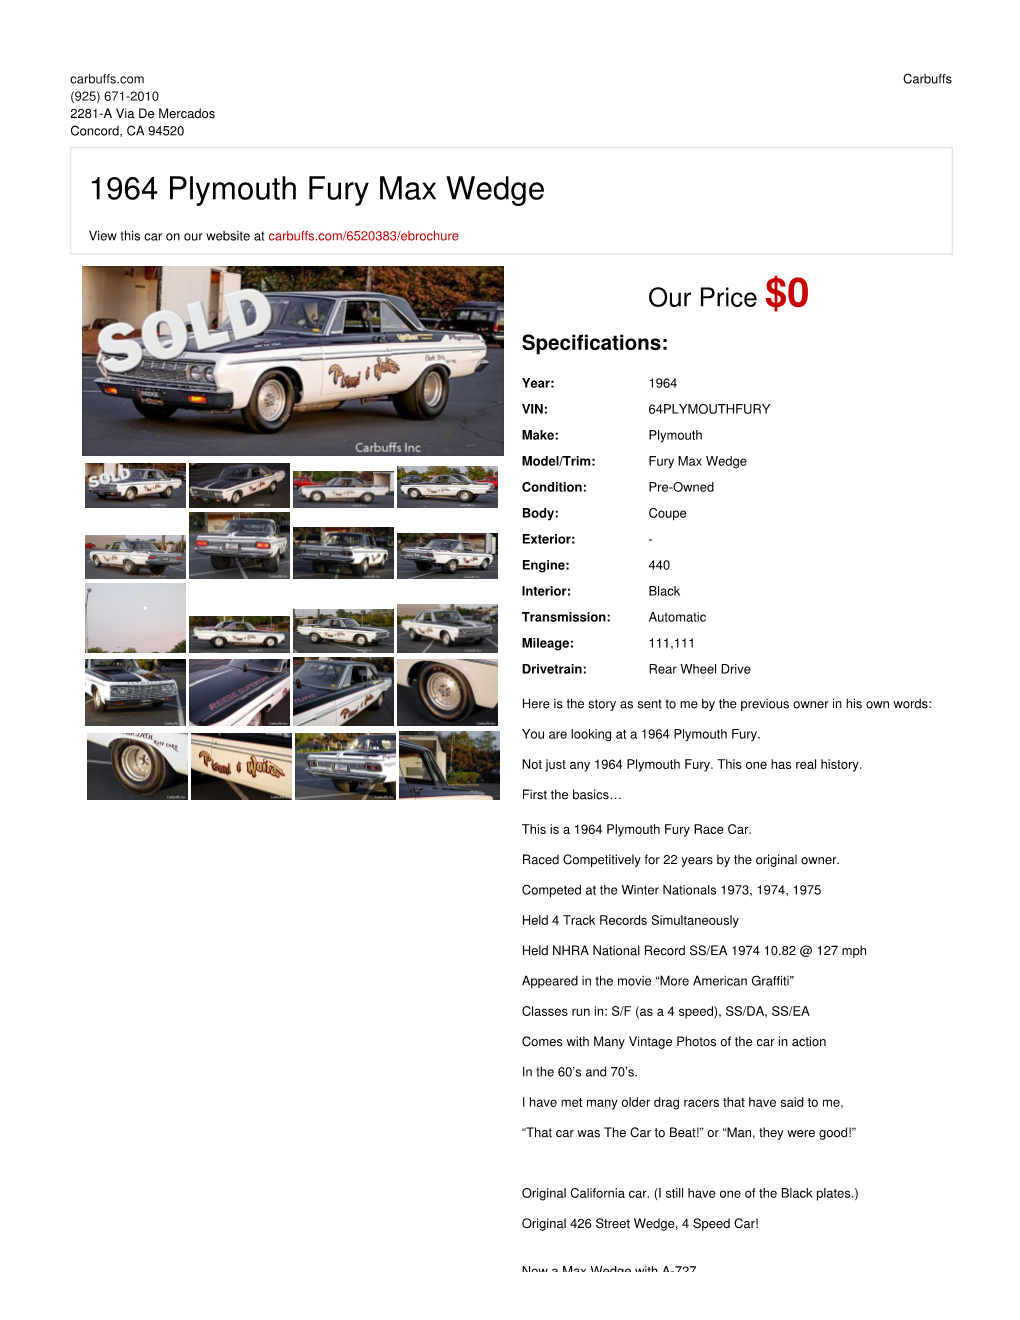 1964 Plymouth Fury Max Wedge